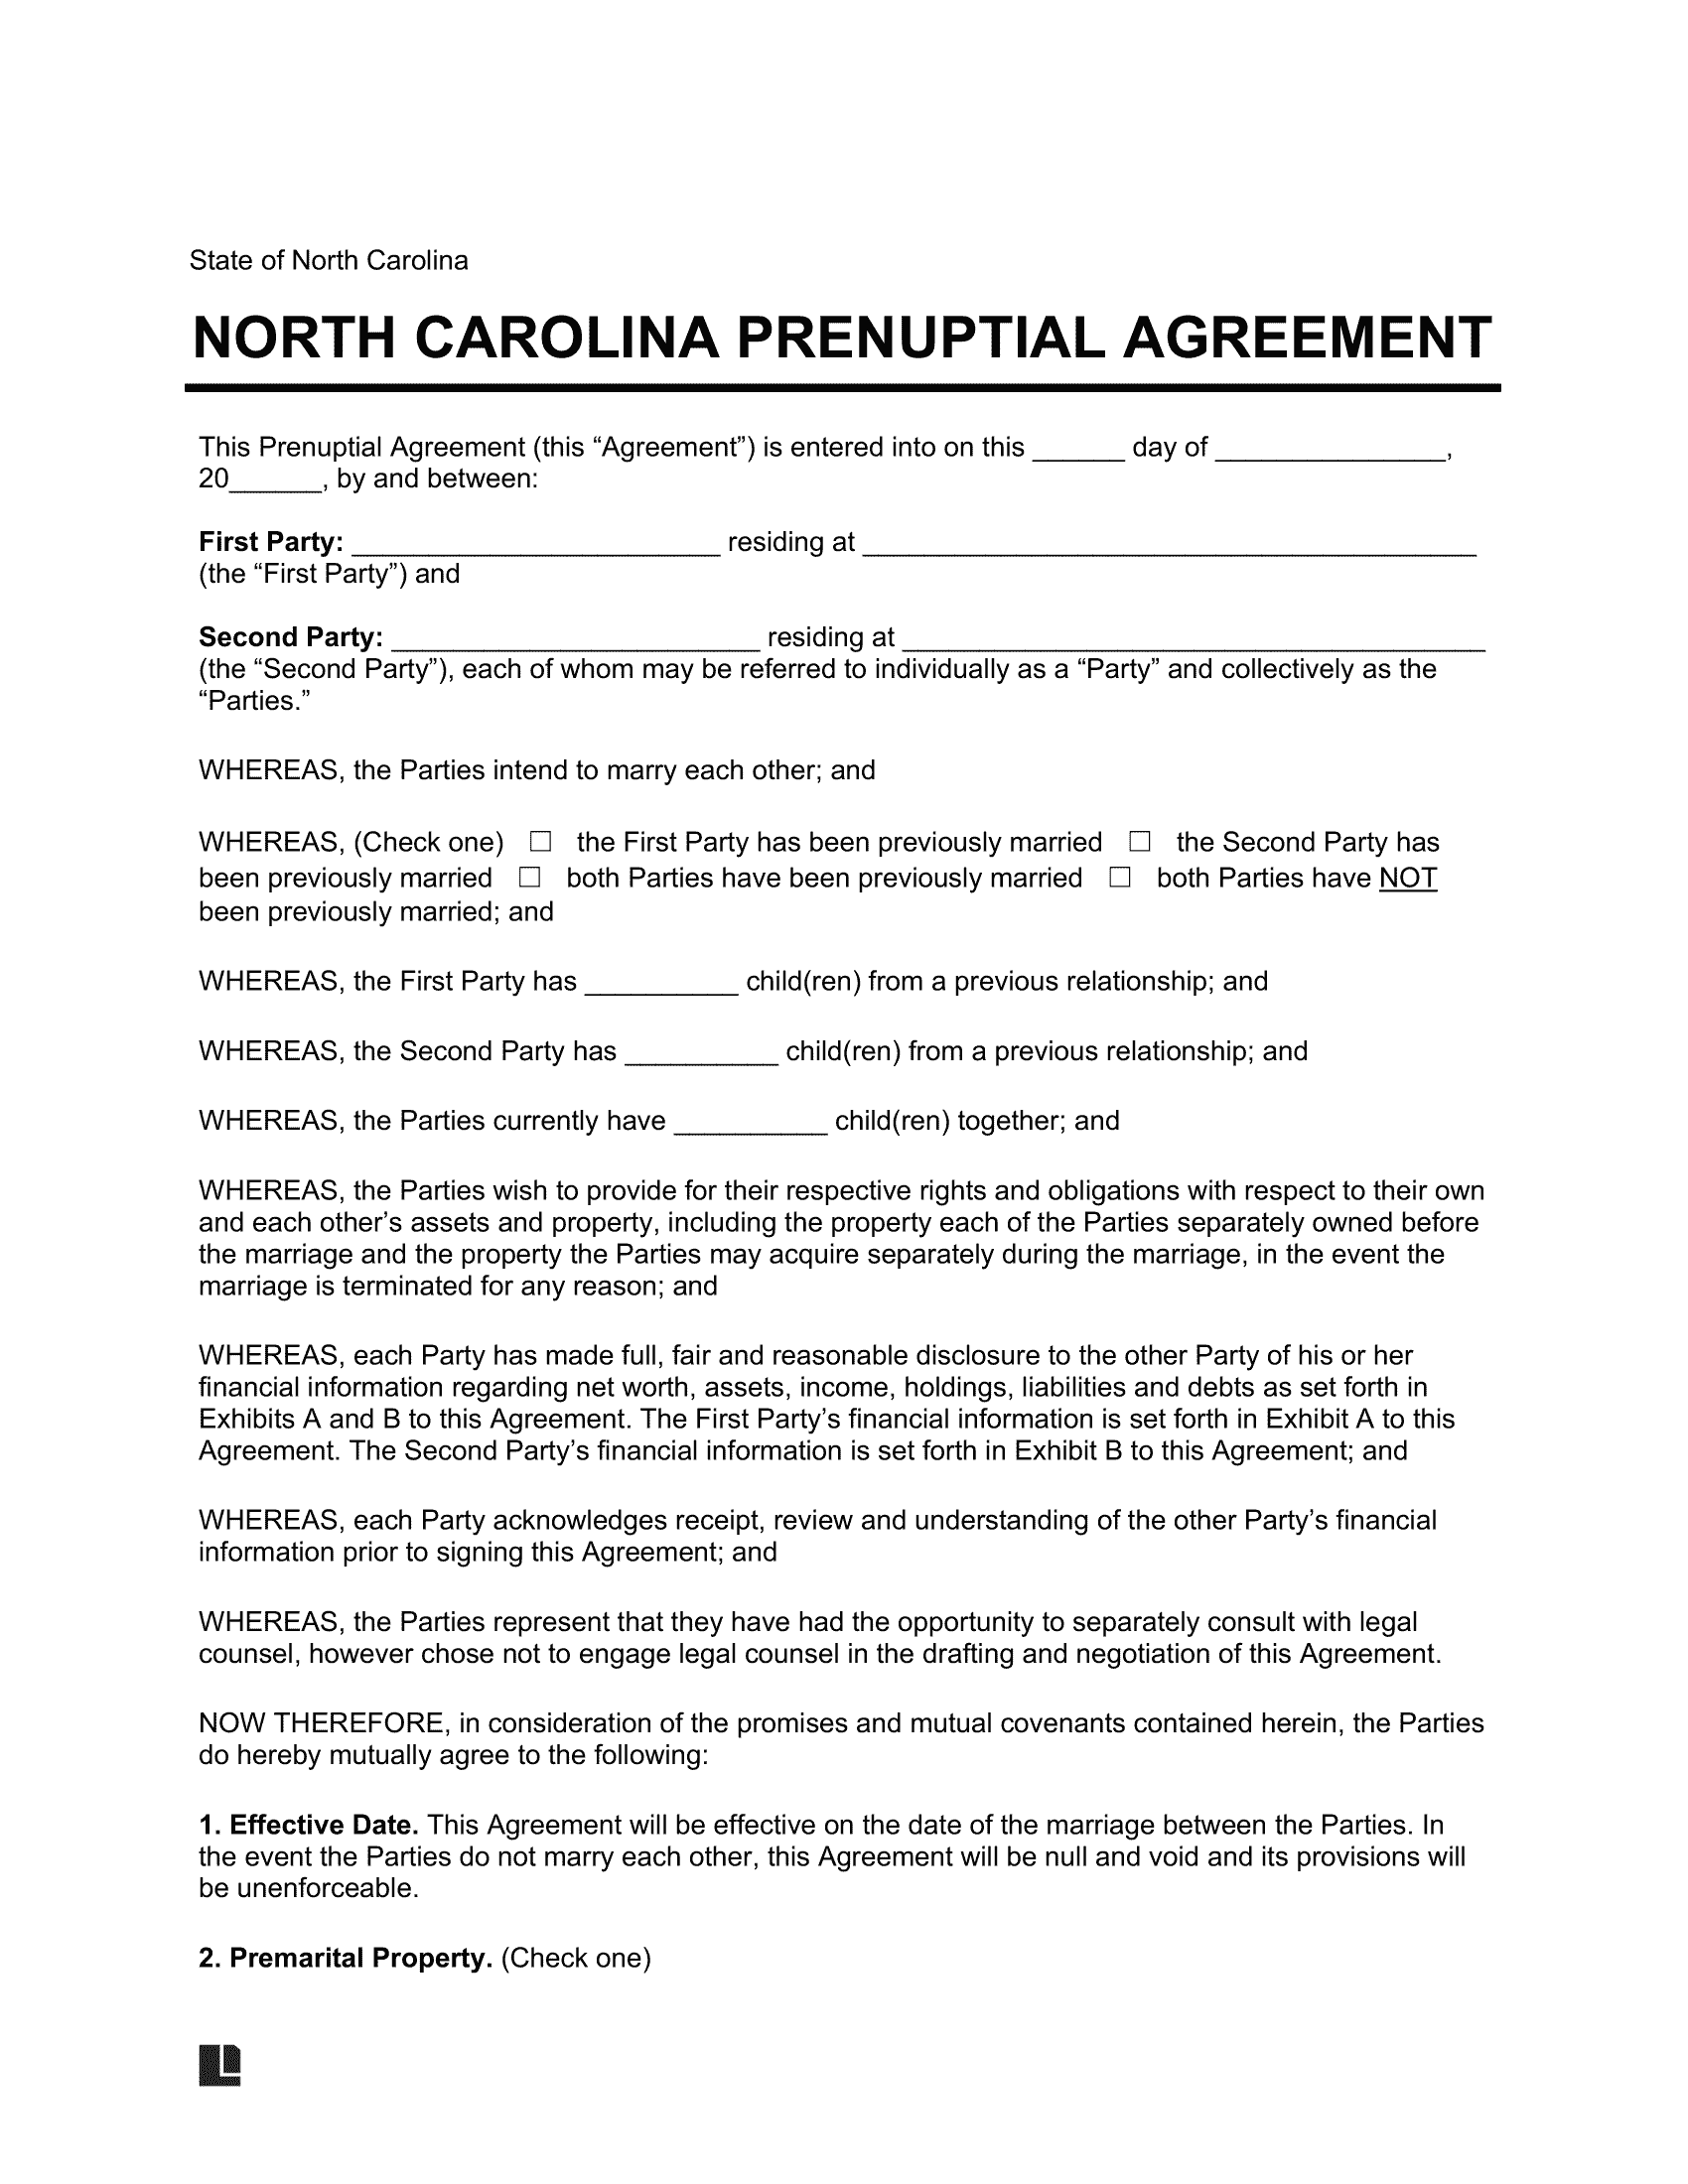 North Carolina Prenuptial Agreement Template